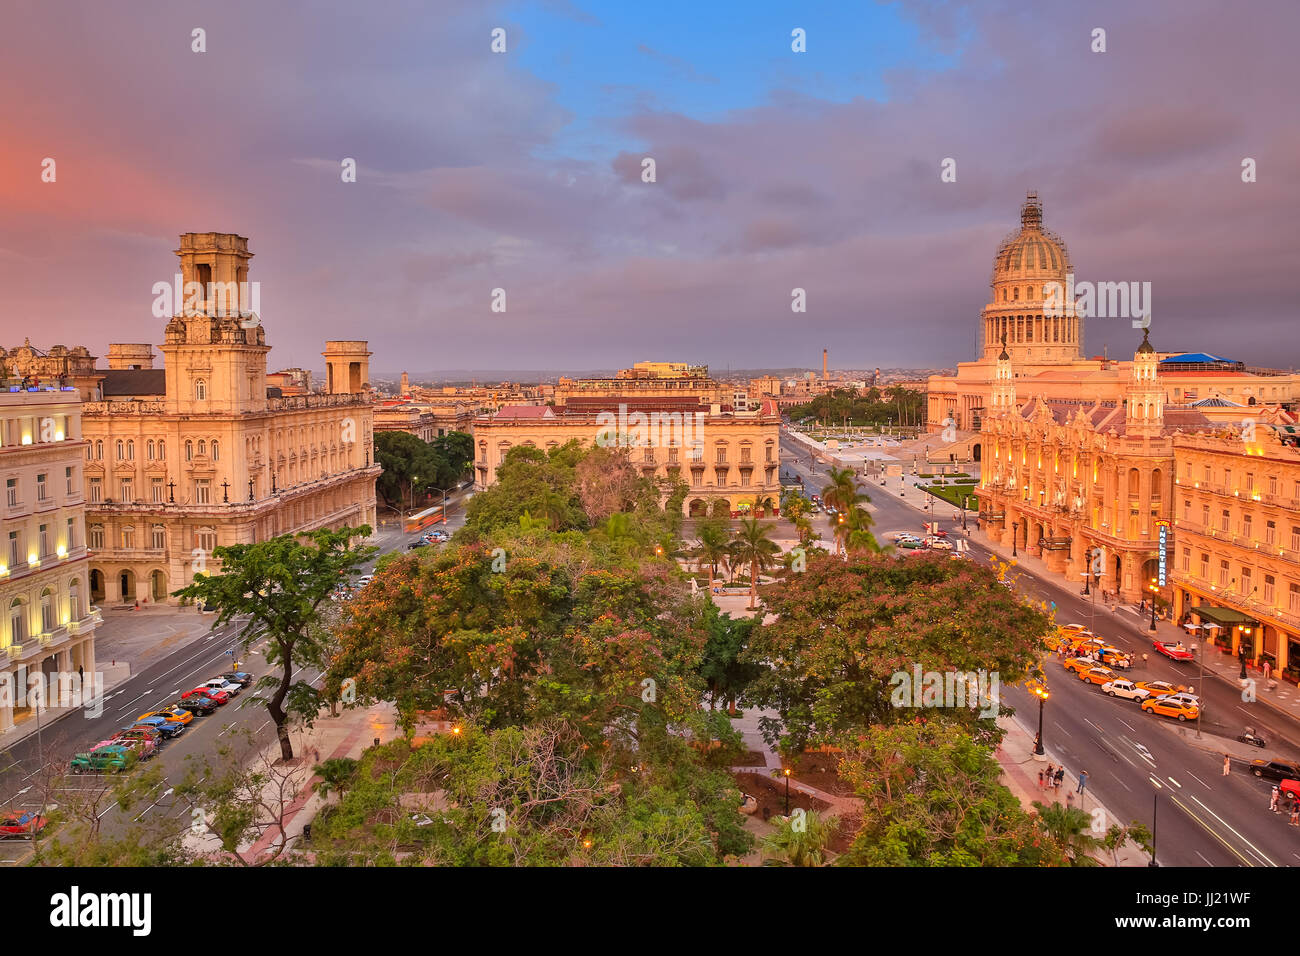 Sunset over El Capitolio, Gran Teatro de la Habana, Parque Central and La Habana Vieja, Old Havana  from above, Havana, Cuba Stock Photo